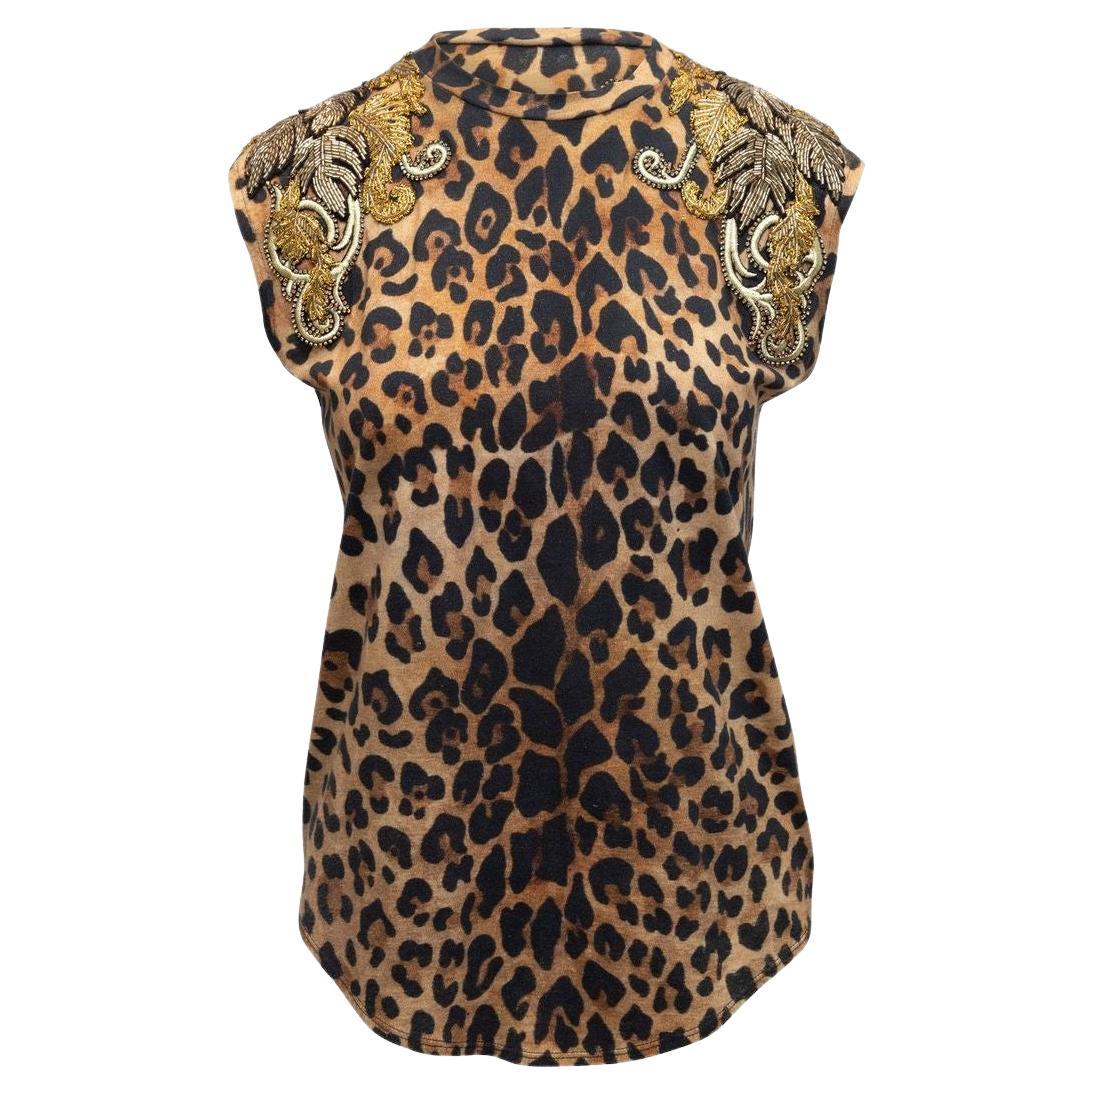 Balmain Tan & Black Leather & Bead-Embellished Leopard Print Top